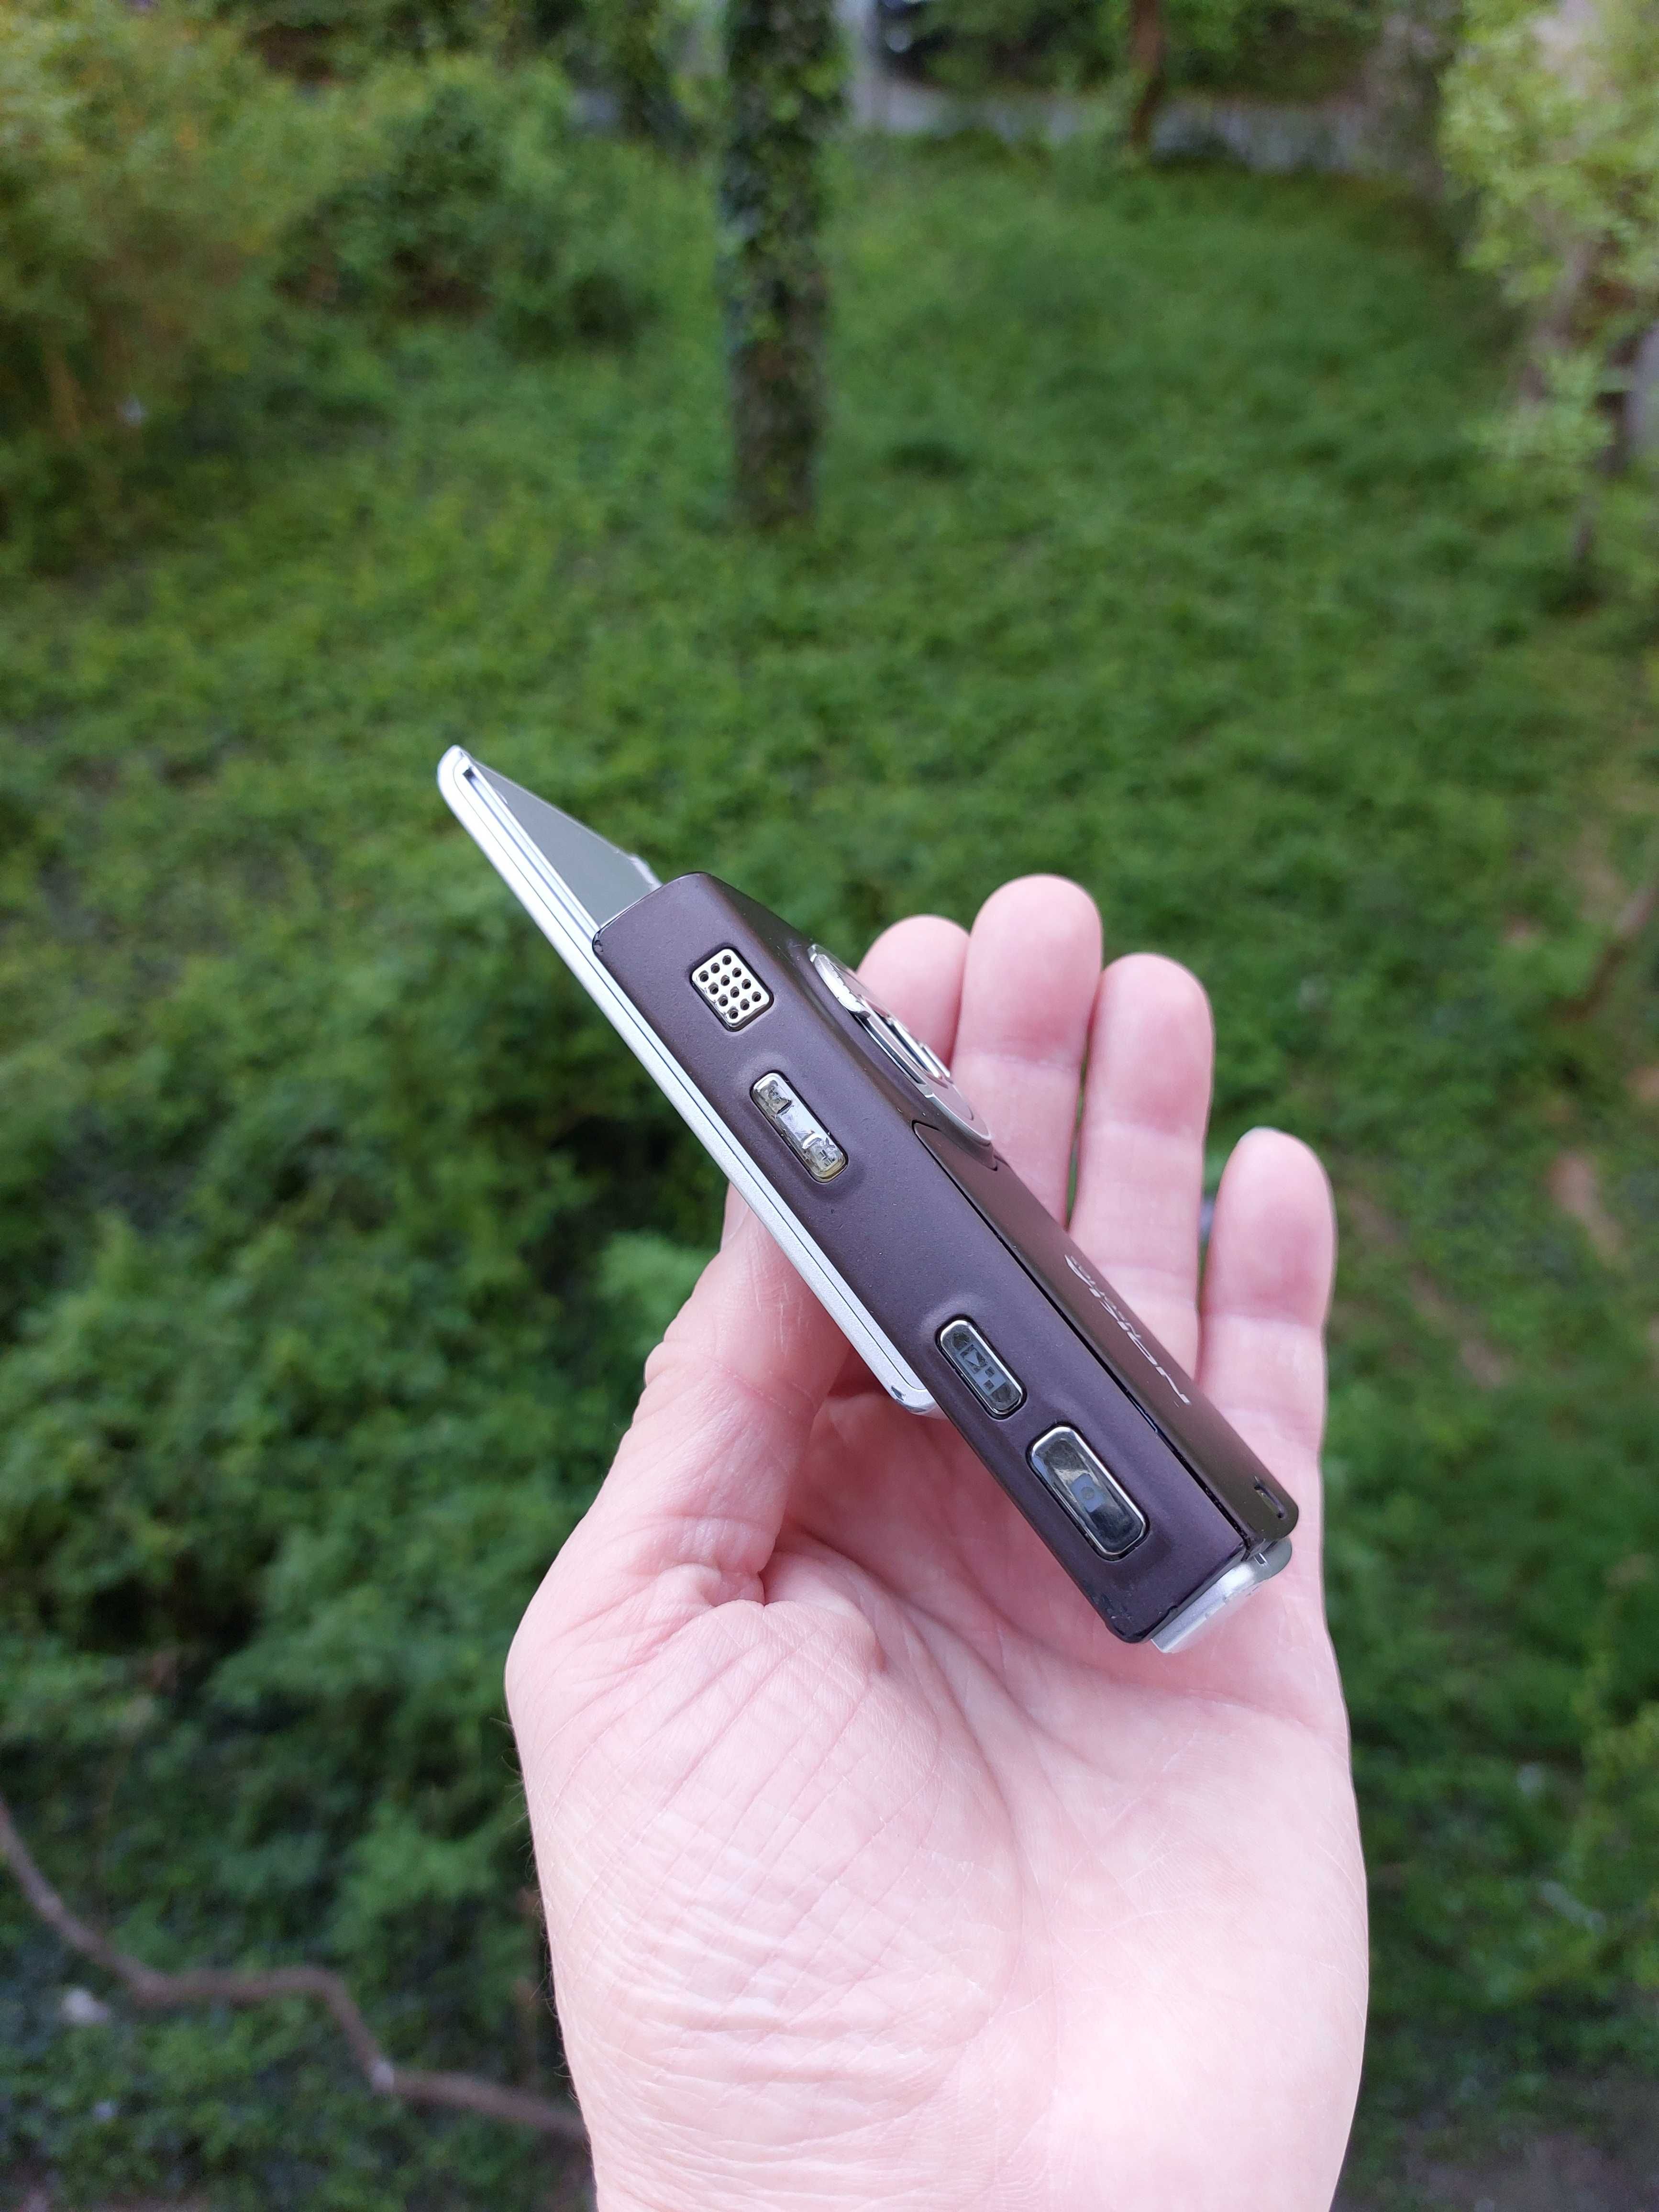 Nokia N95 original Finlanda decodat stare f buna doar 31 ore vorbite